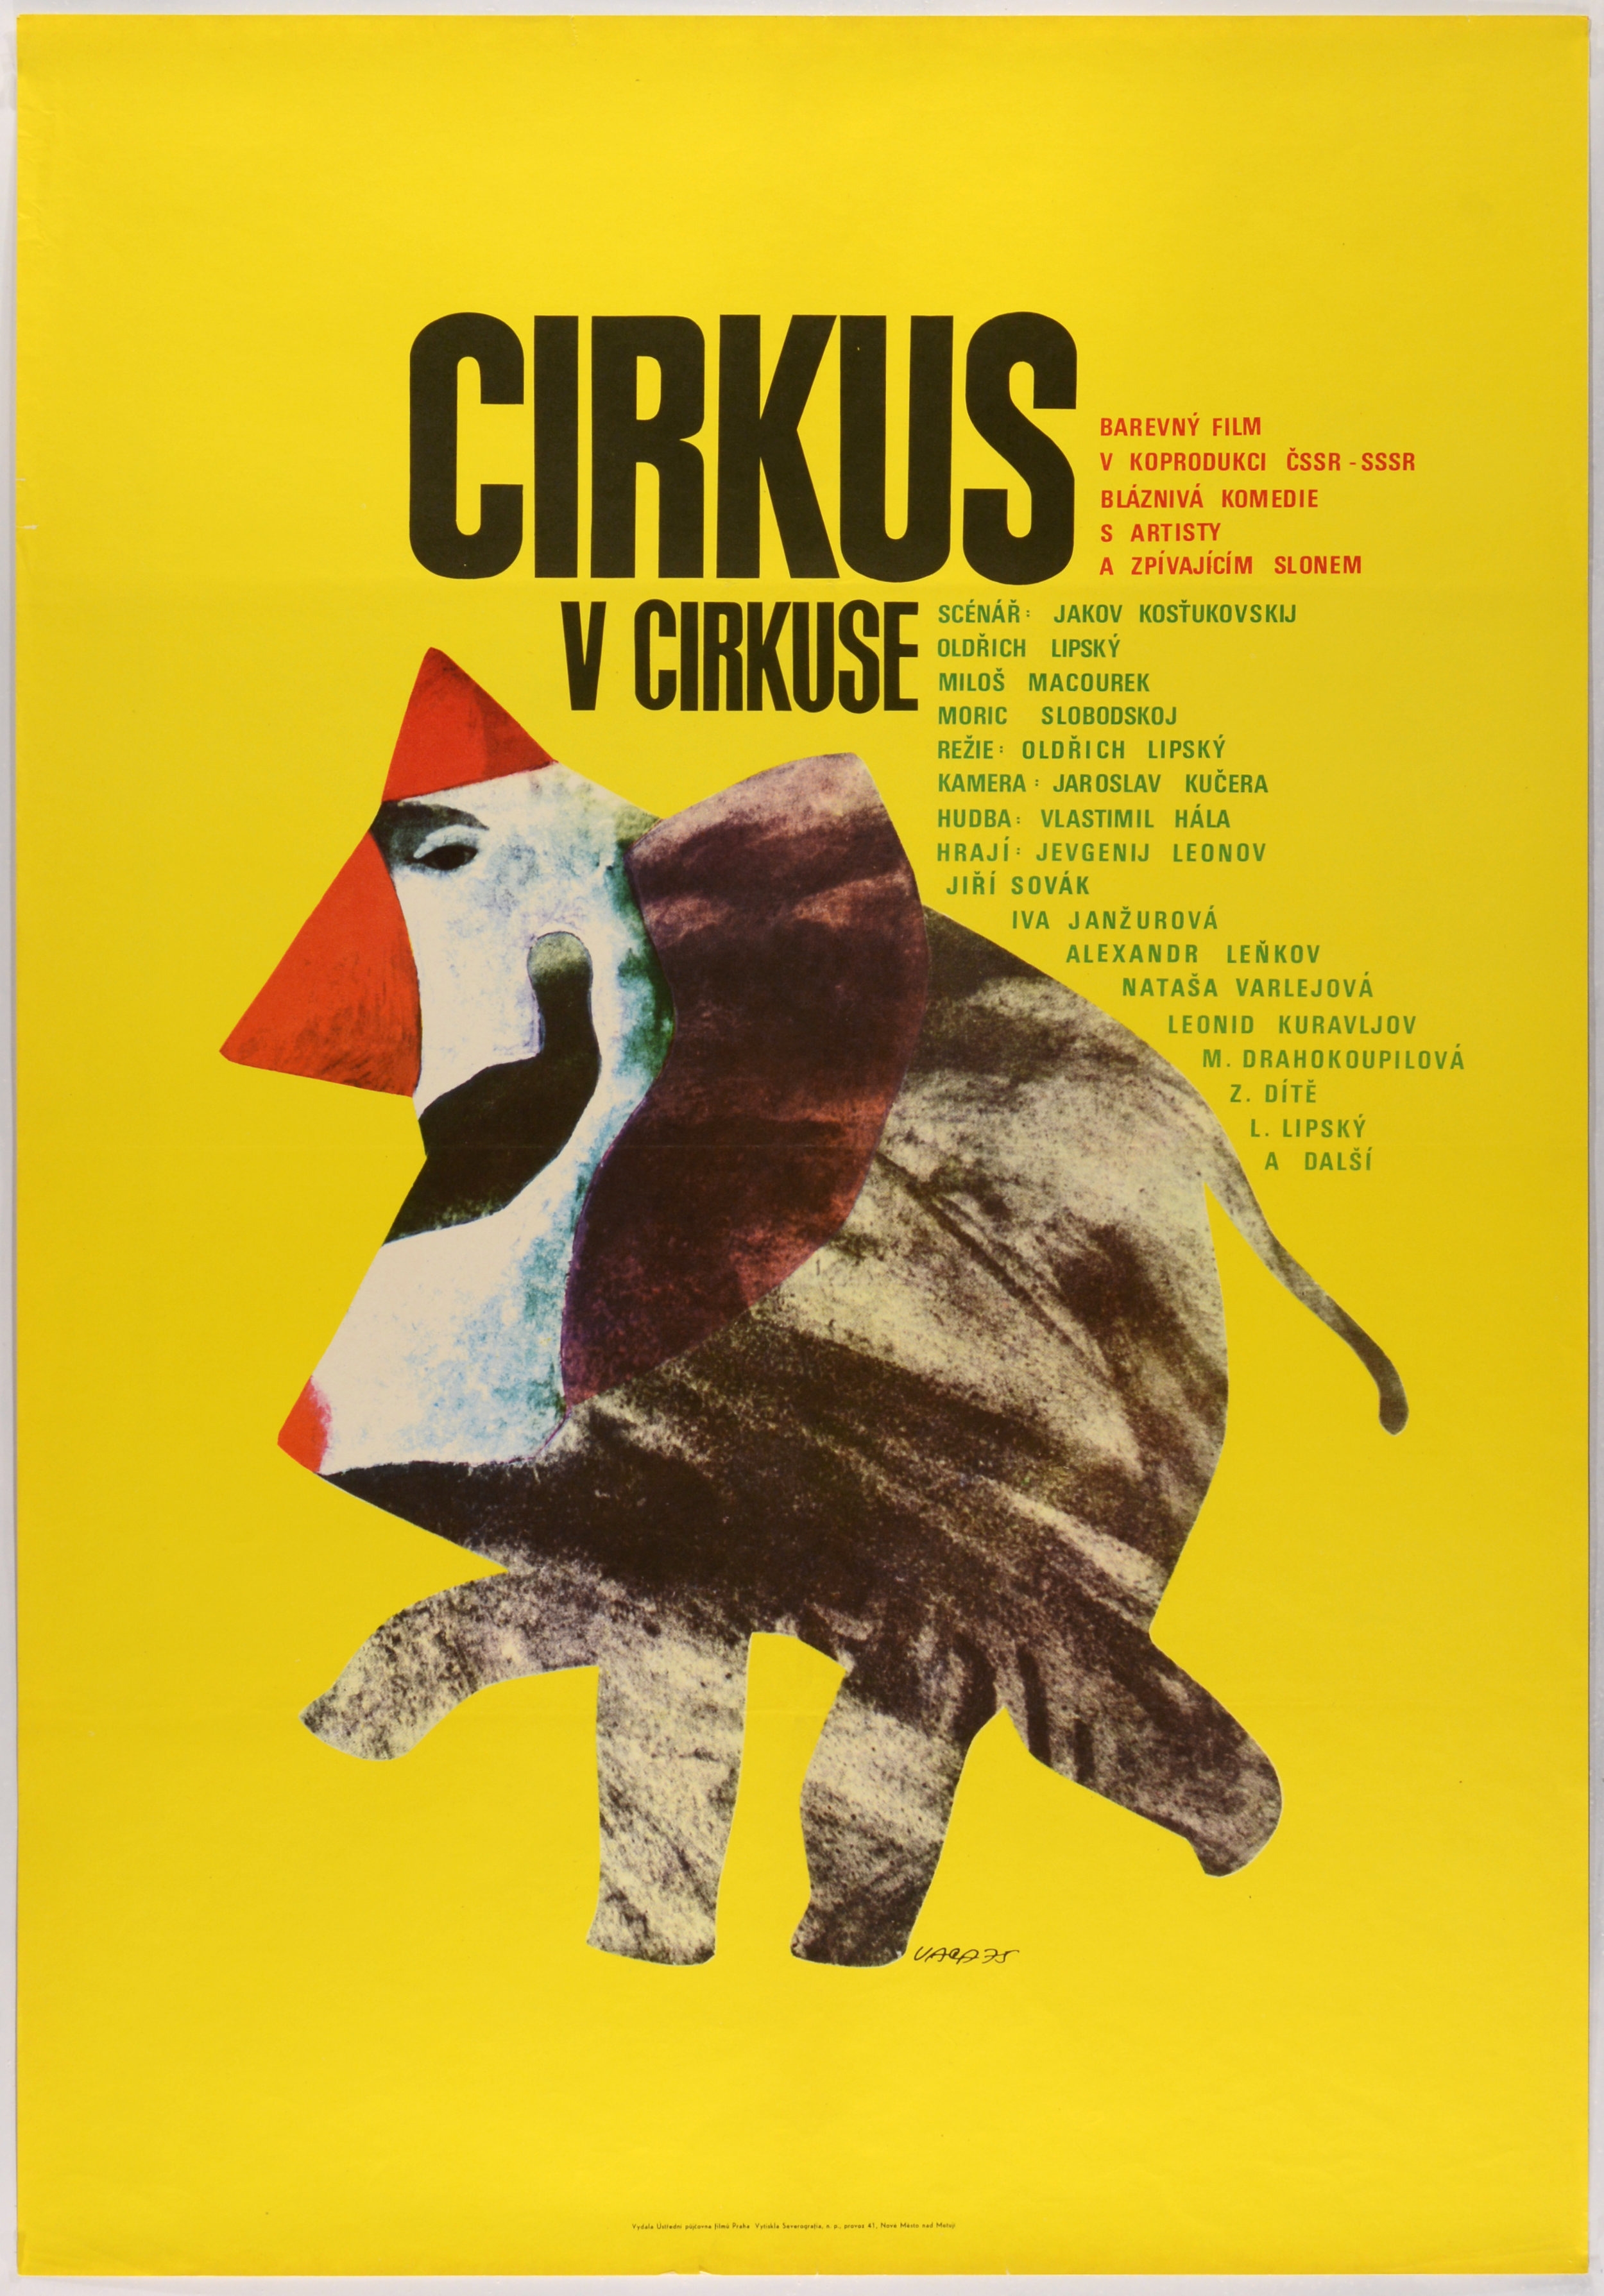 CIRKUS V CIRKUSE by Karel Vaca, 1975